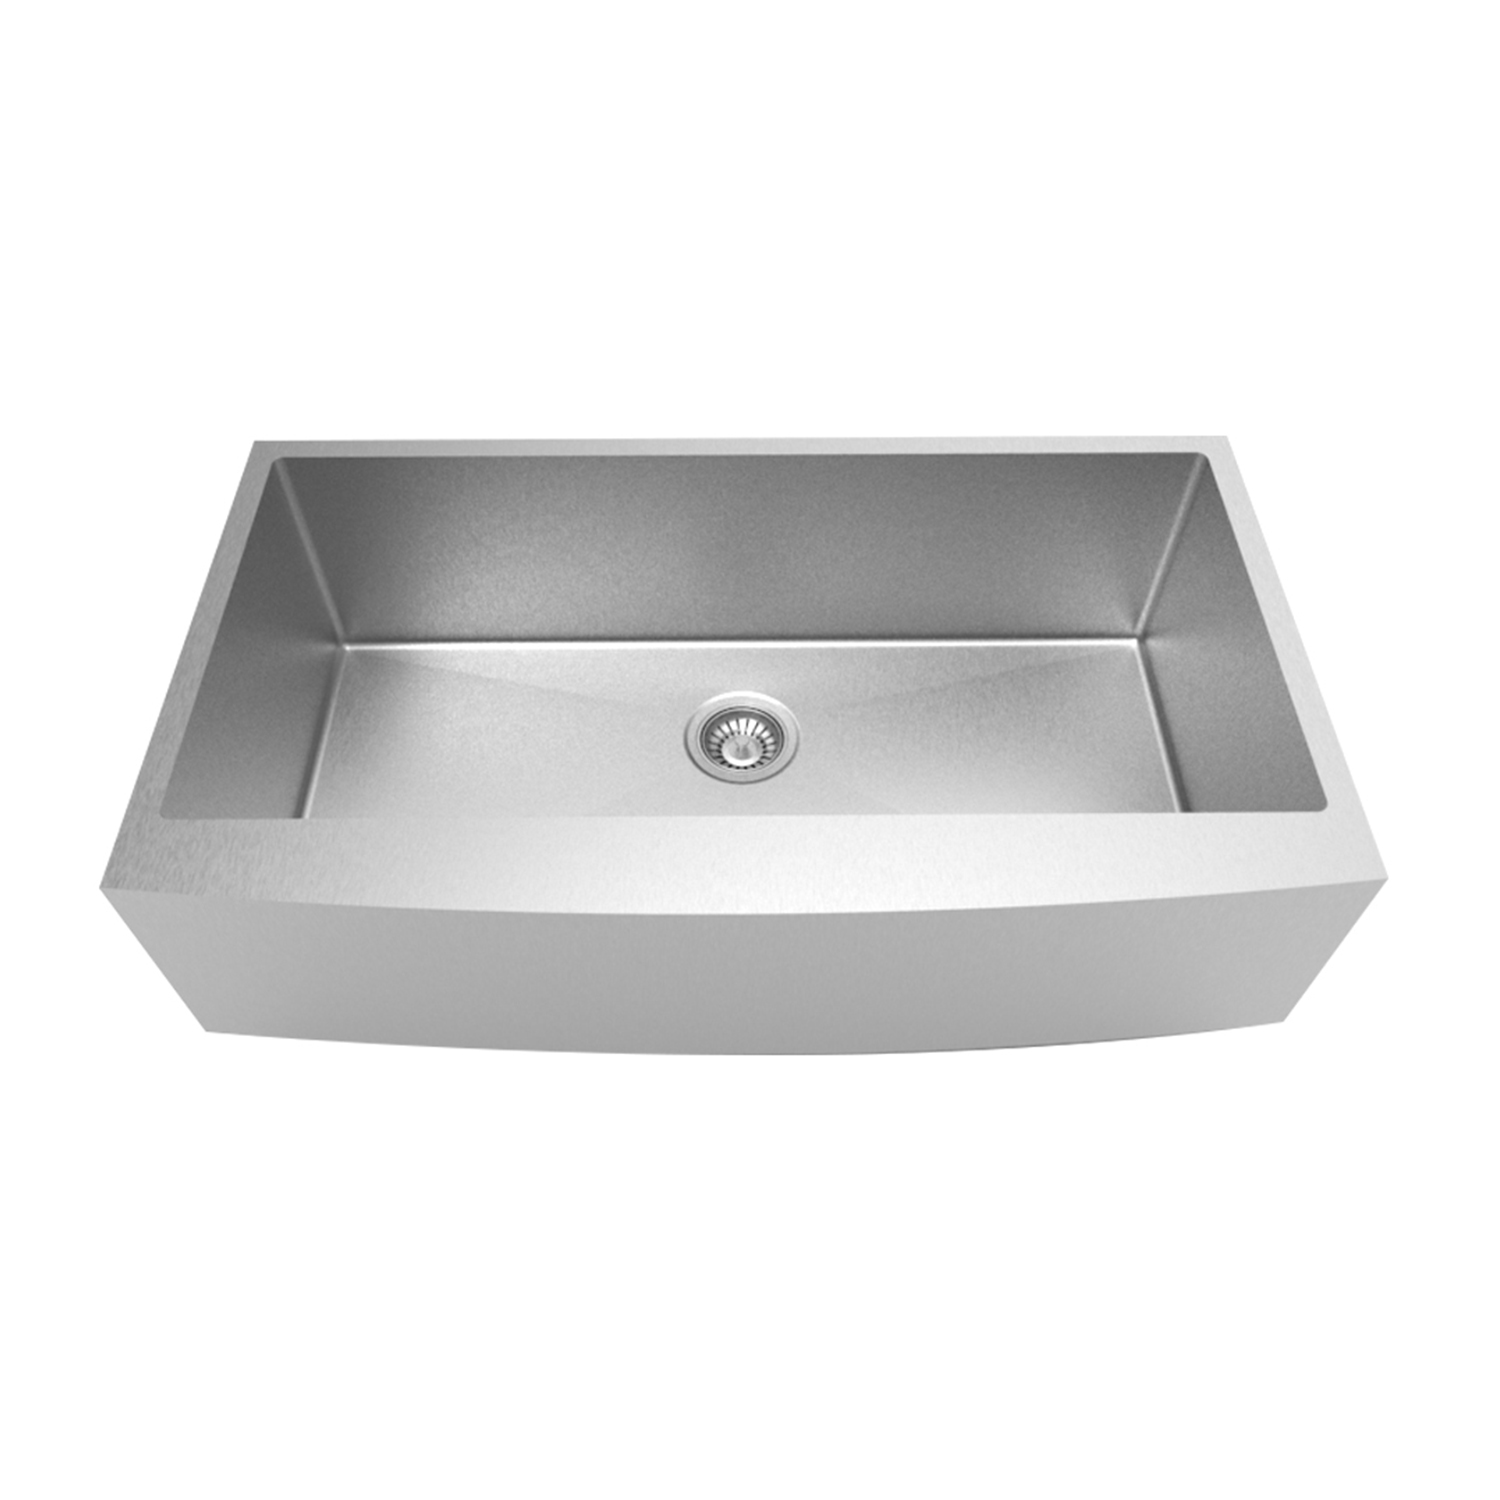 HU3322S 304 Stainless Steel Single Bowl Farmhouse Apron Kitchen Sink